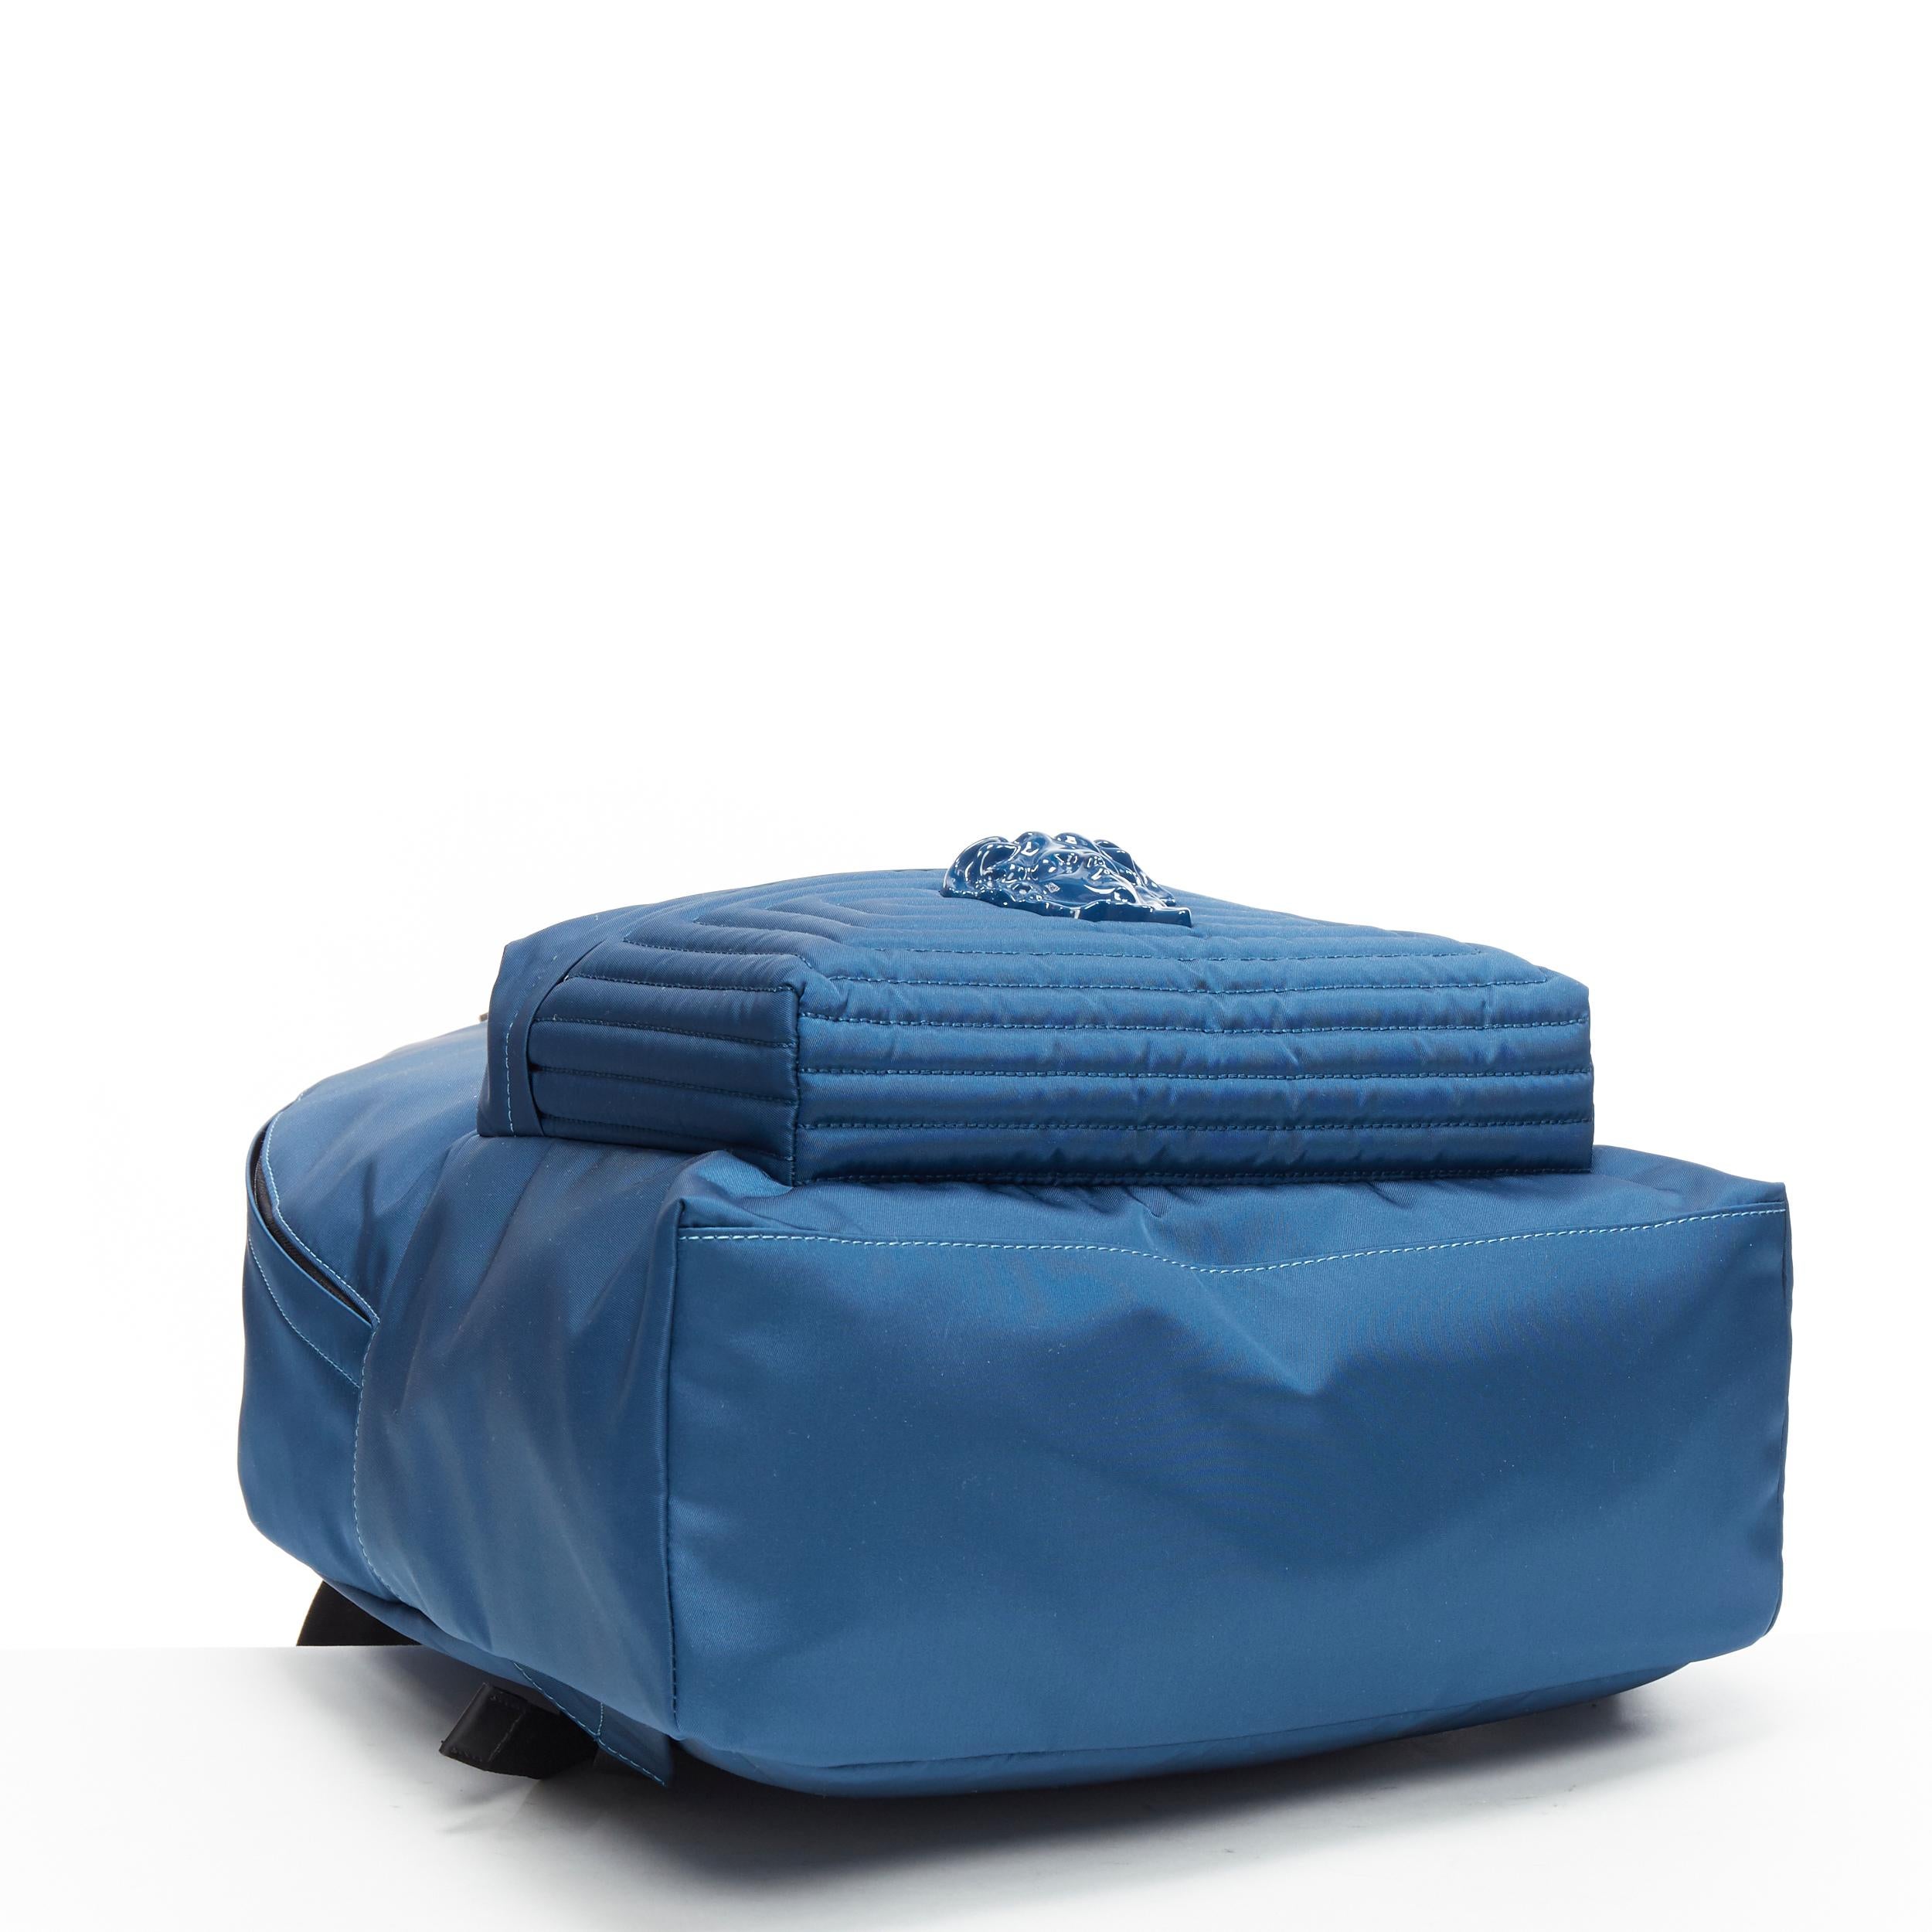 Blue new VERSACE Palazzo Medusa navy nylon Greca stitch front pocket backpack